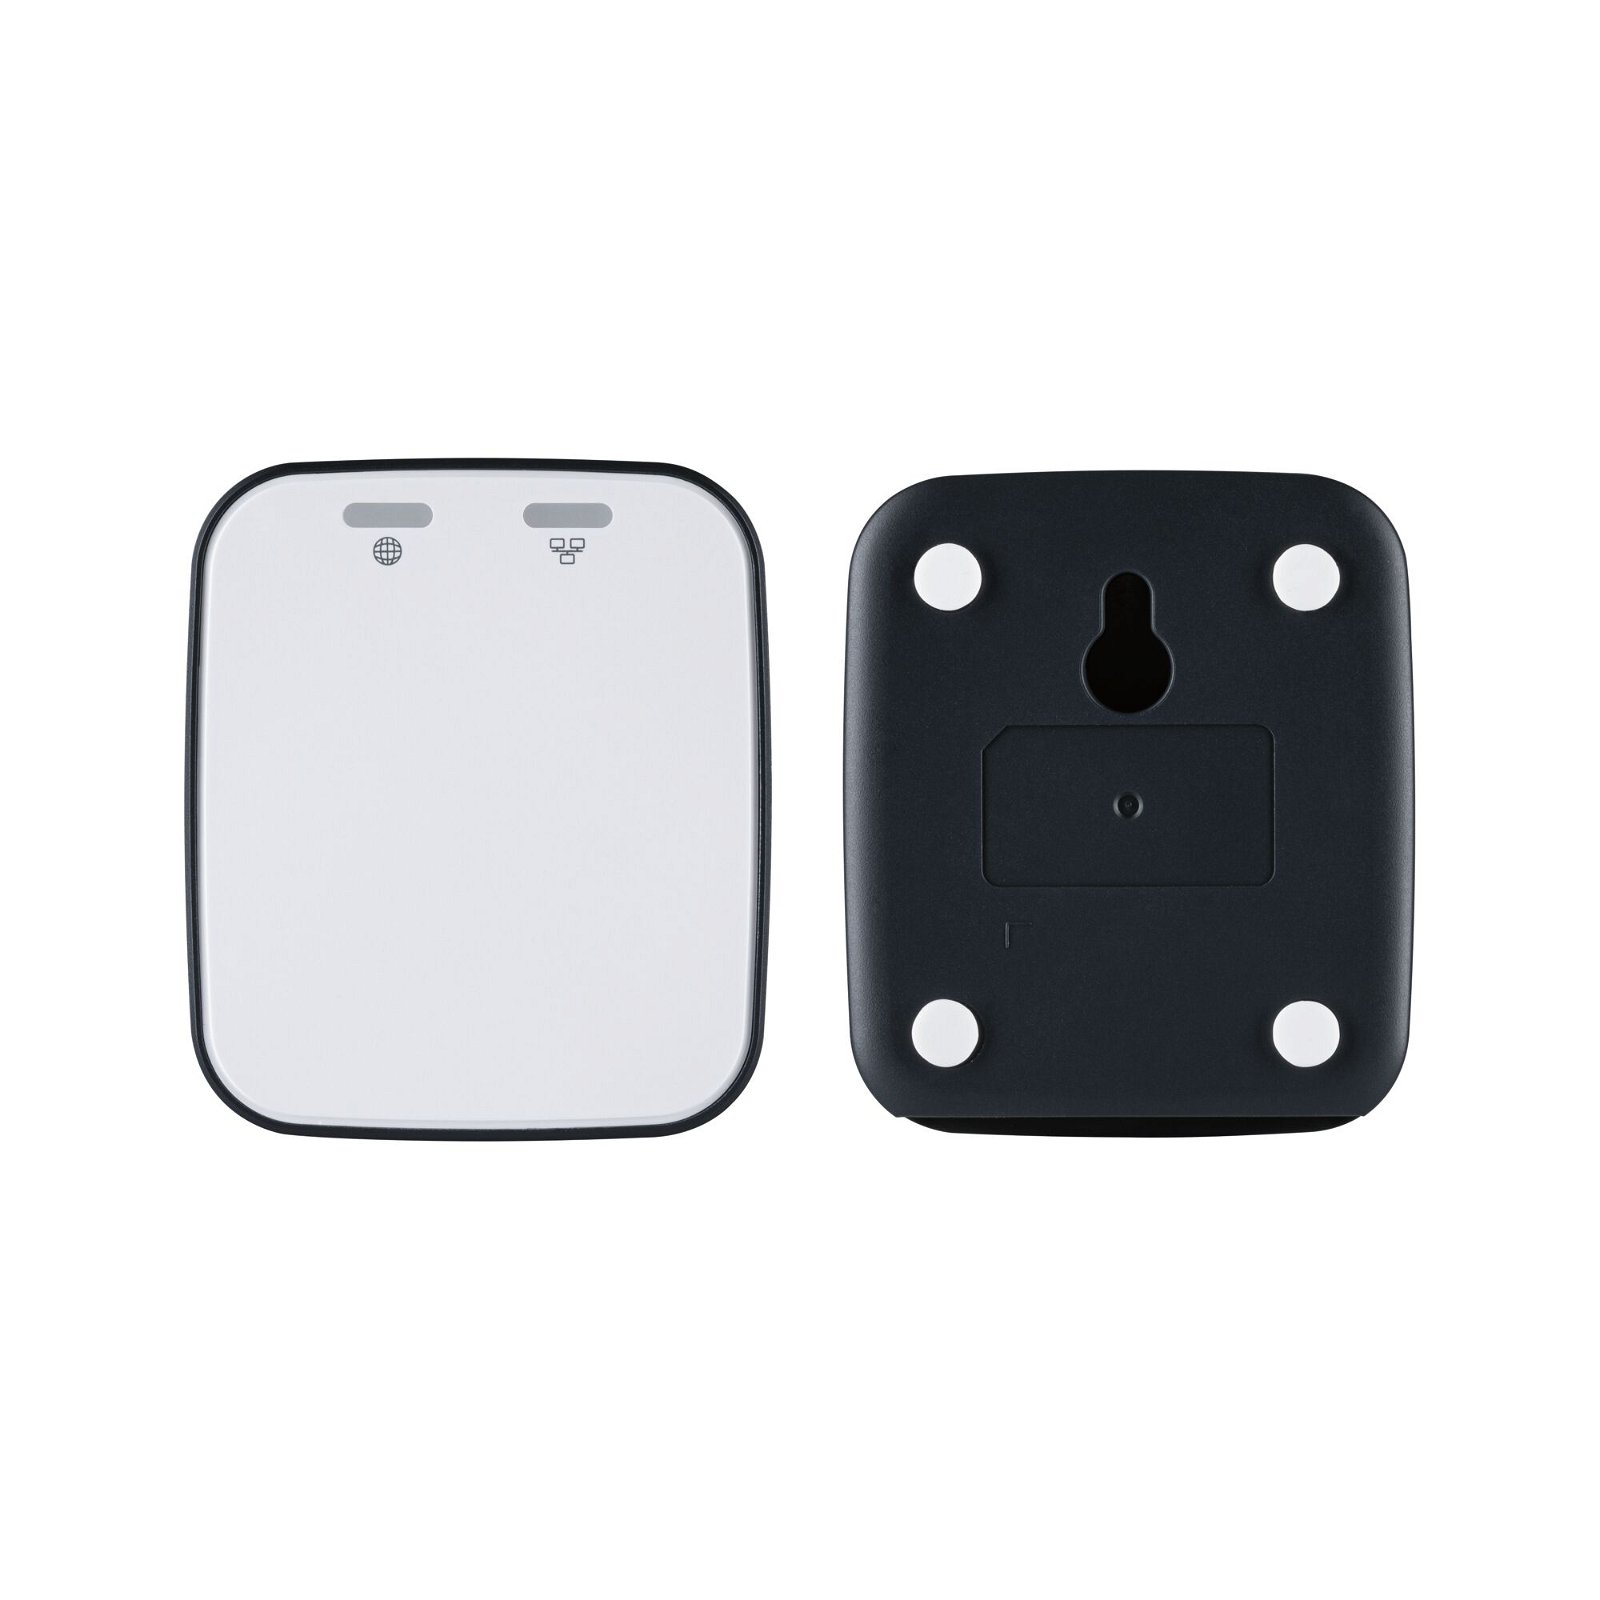 Kits de démarrage Zigbee 3.0 Smart Home smik Gateway + panneau LED Amaris